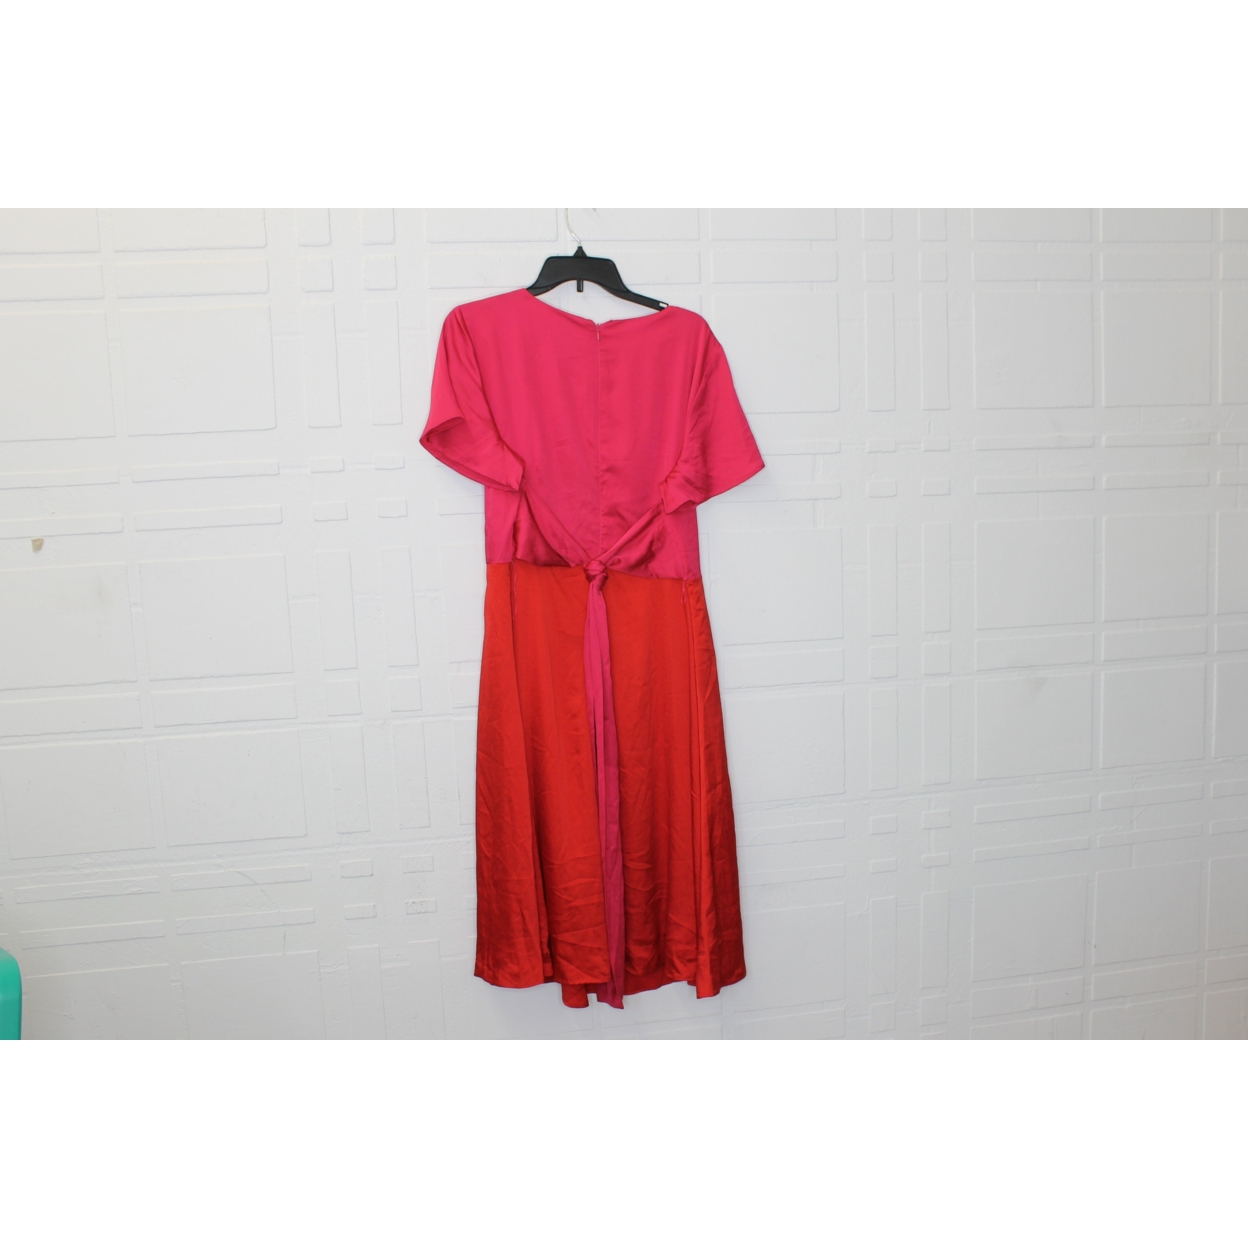 ANN TAYLOR Colorblock Dress Size 14